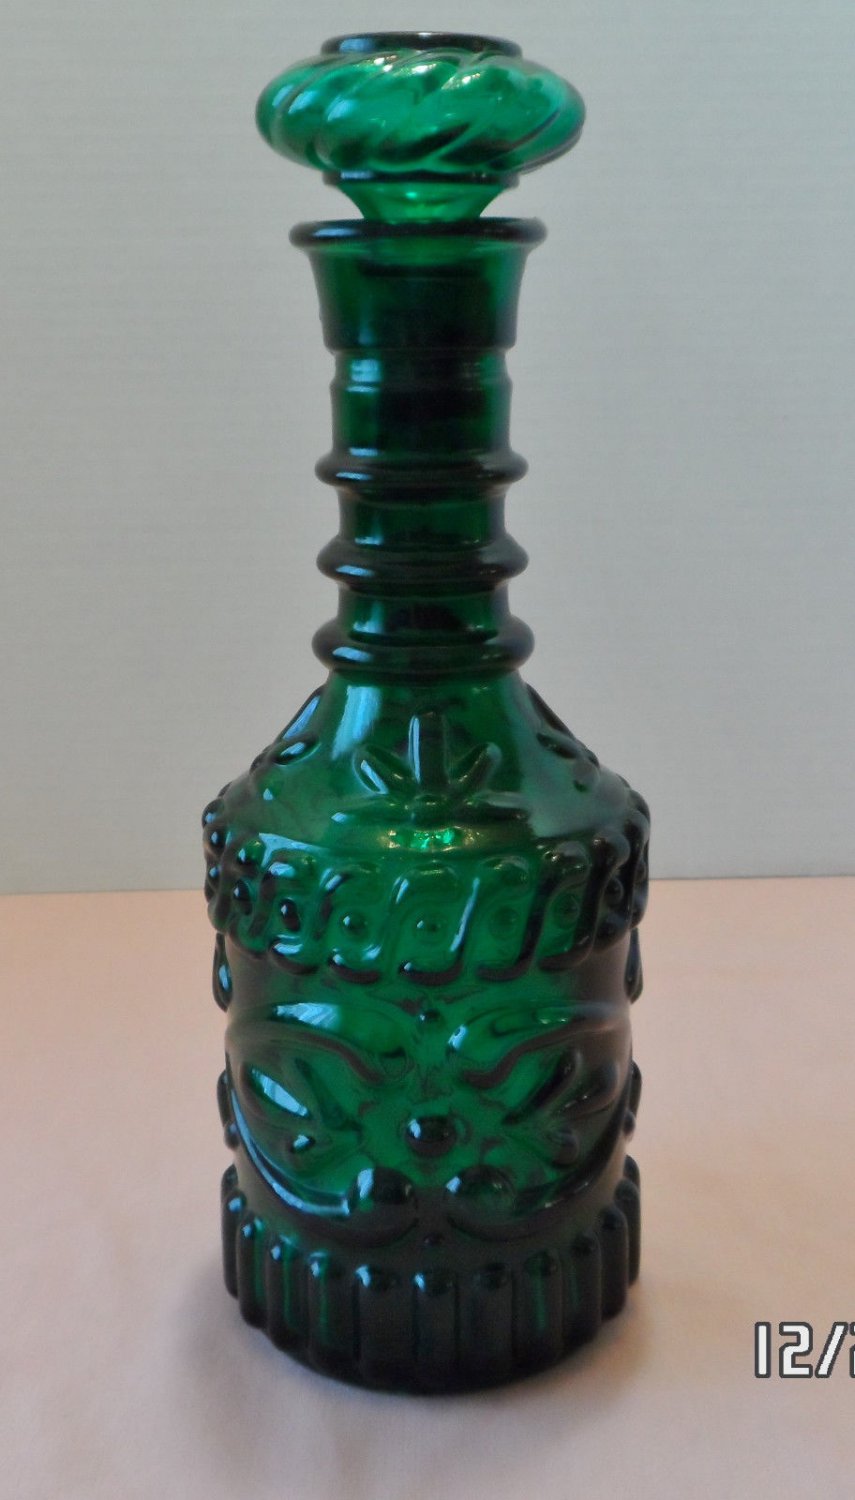 Jim Beam Liquor Decanter Bottle with Stopper Emerald Green Glass